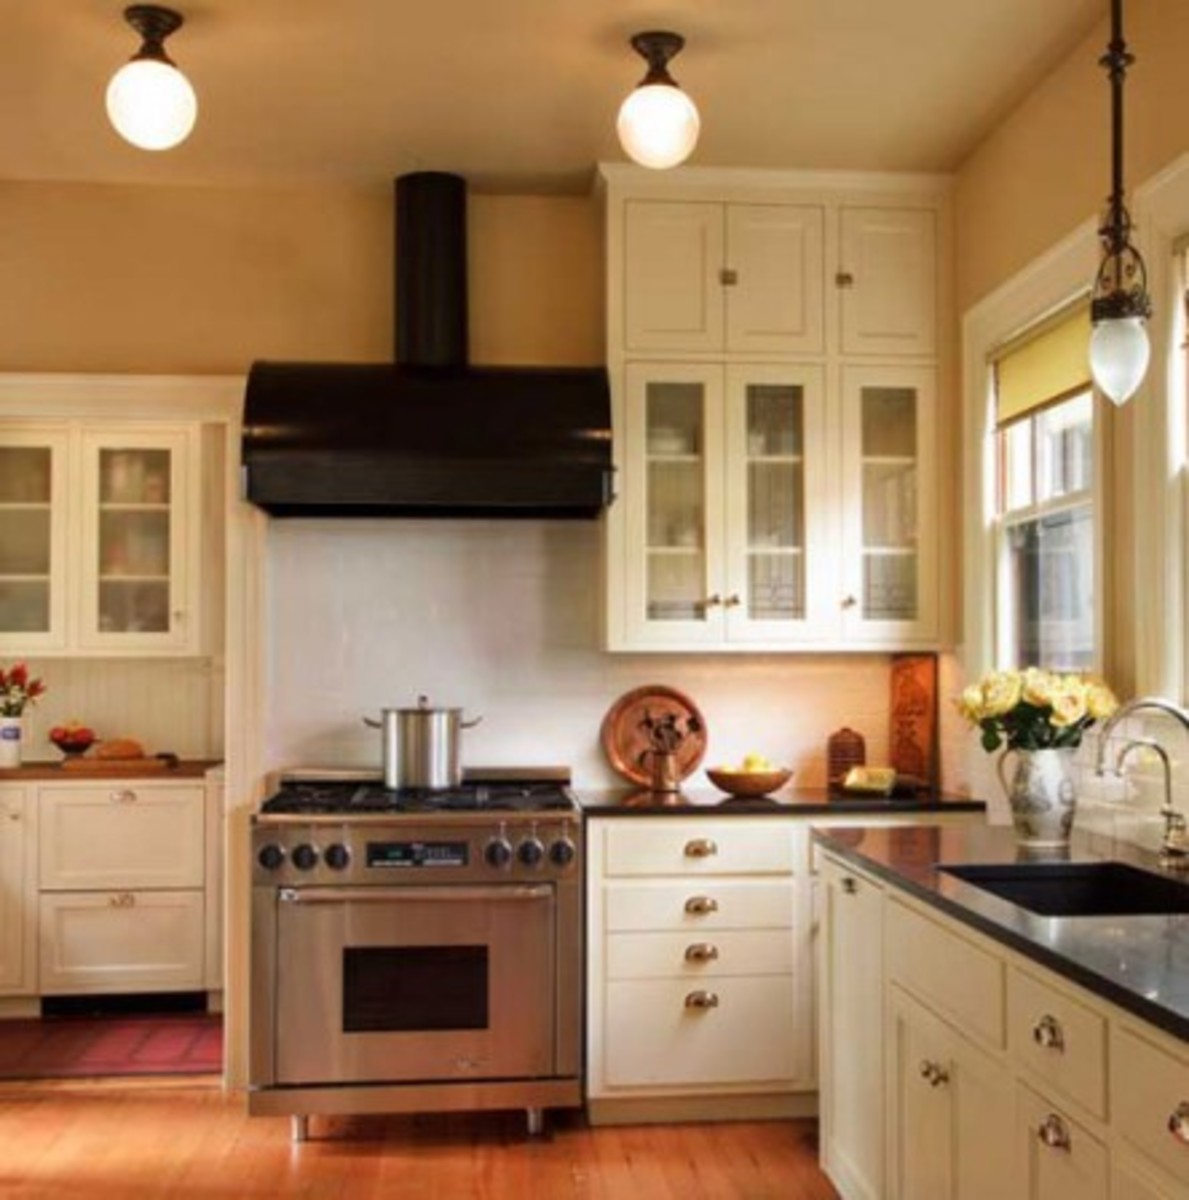 kitchen 1920s kitchens cabinets remodel countertops 1920 finish classic artsandcraftshomes bungalow designs master craftsman interior honed refurbished granite based windows